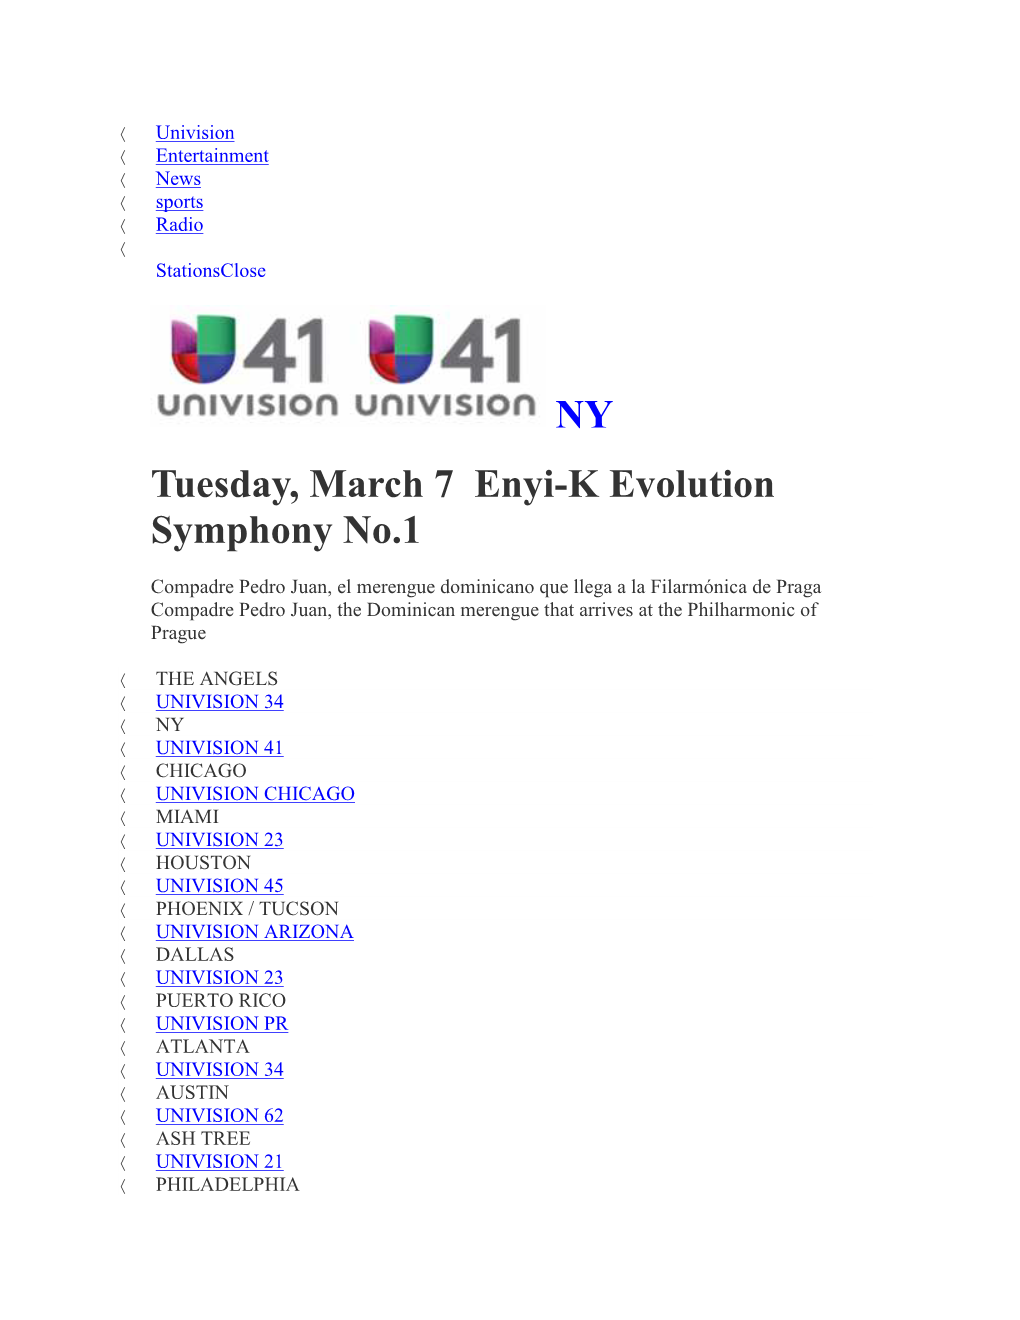 Enyi-K Evolution Symphony No.1